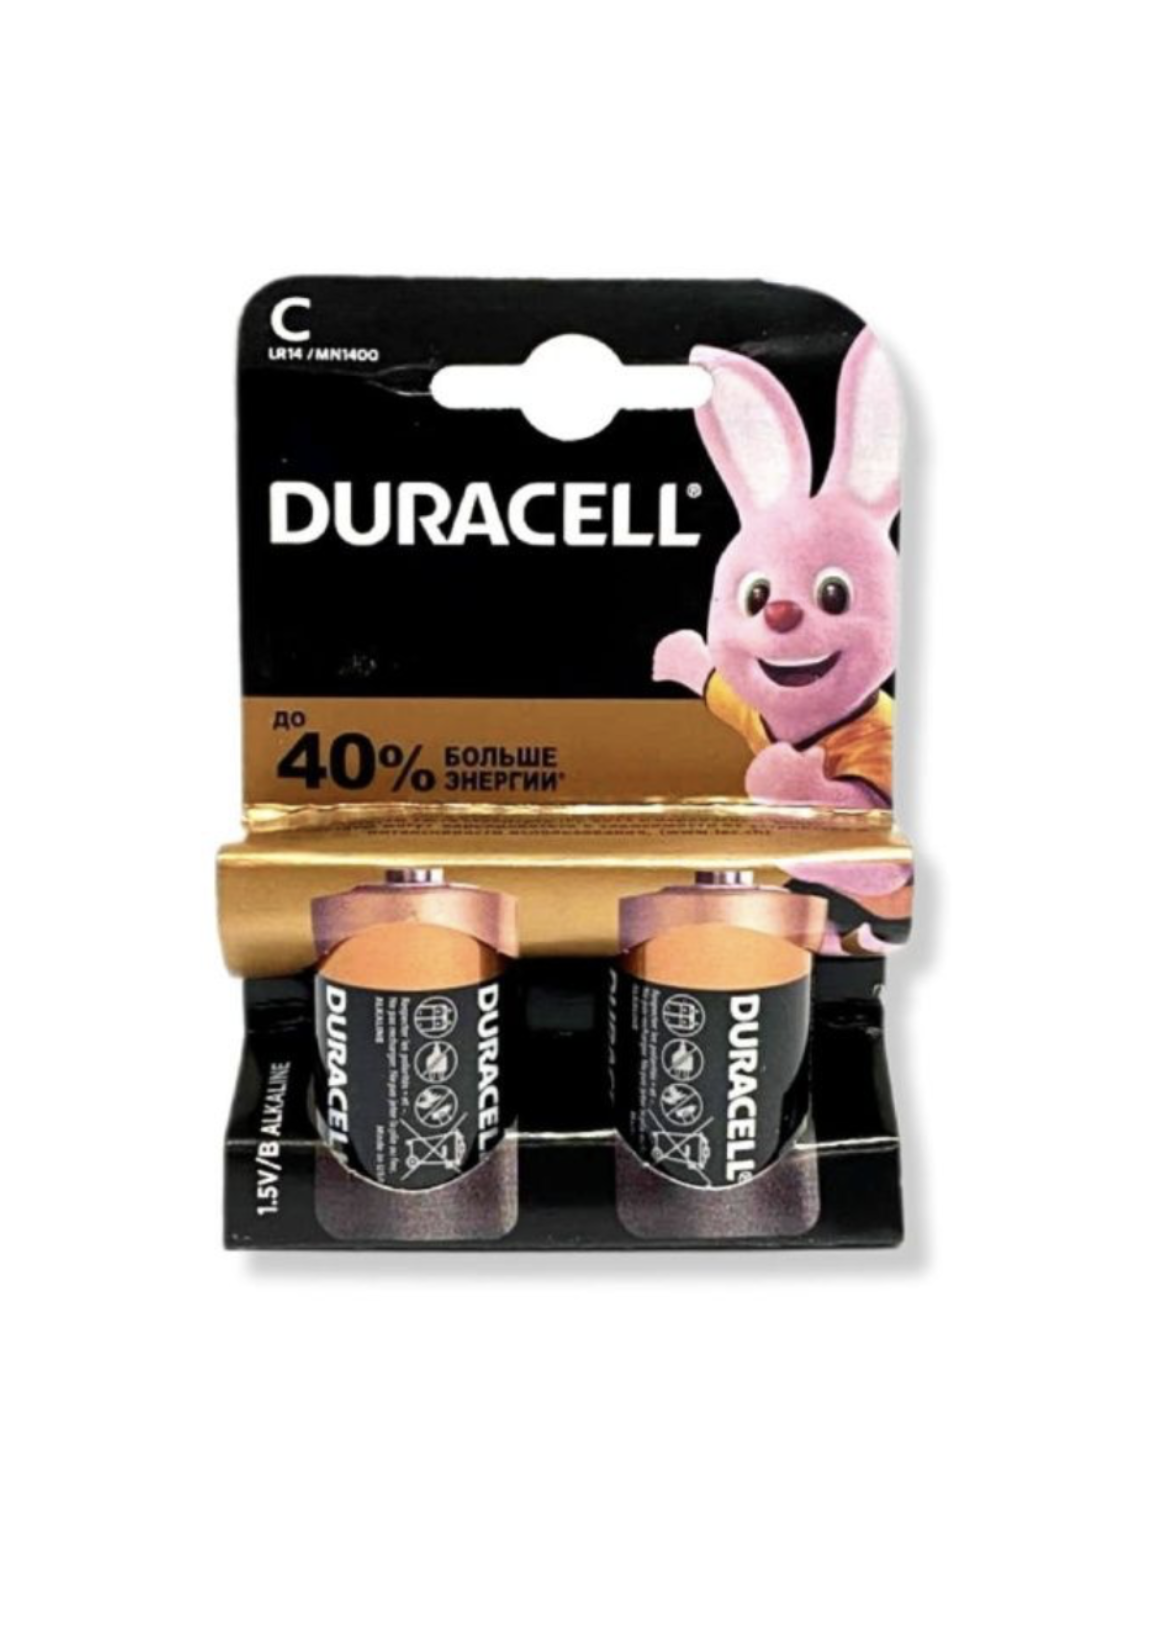   / Duracell -  +40%  C LR14/MN1400, 2 